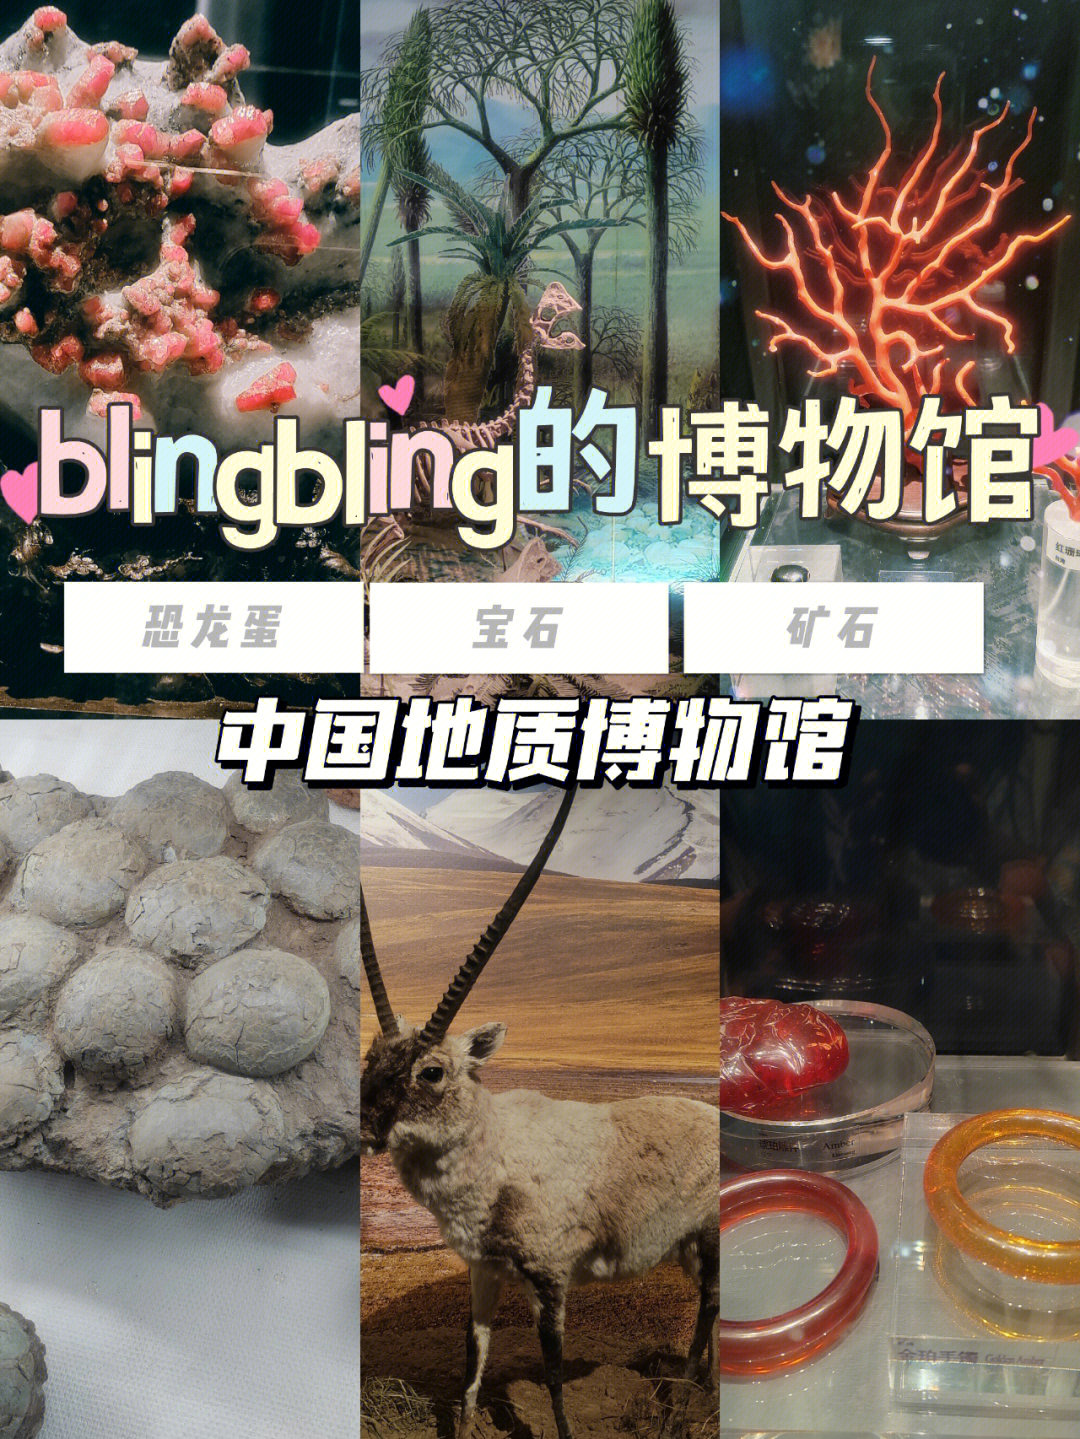 bulingbuling的小众博物馆中国地质博物馆